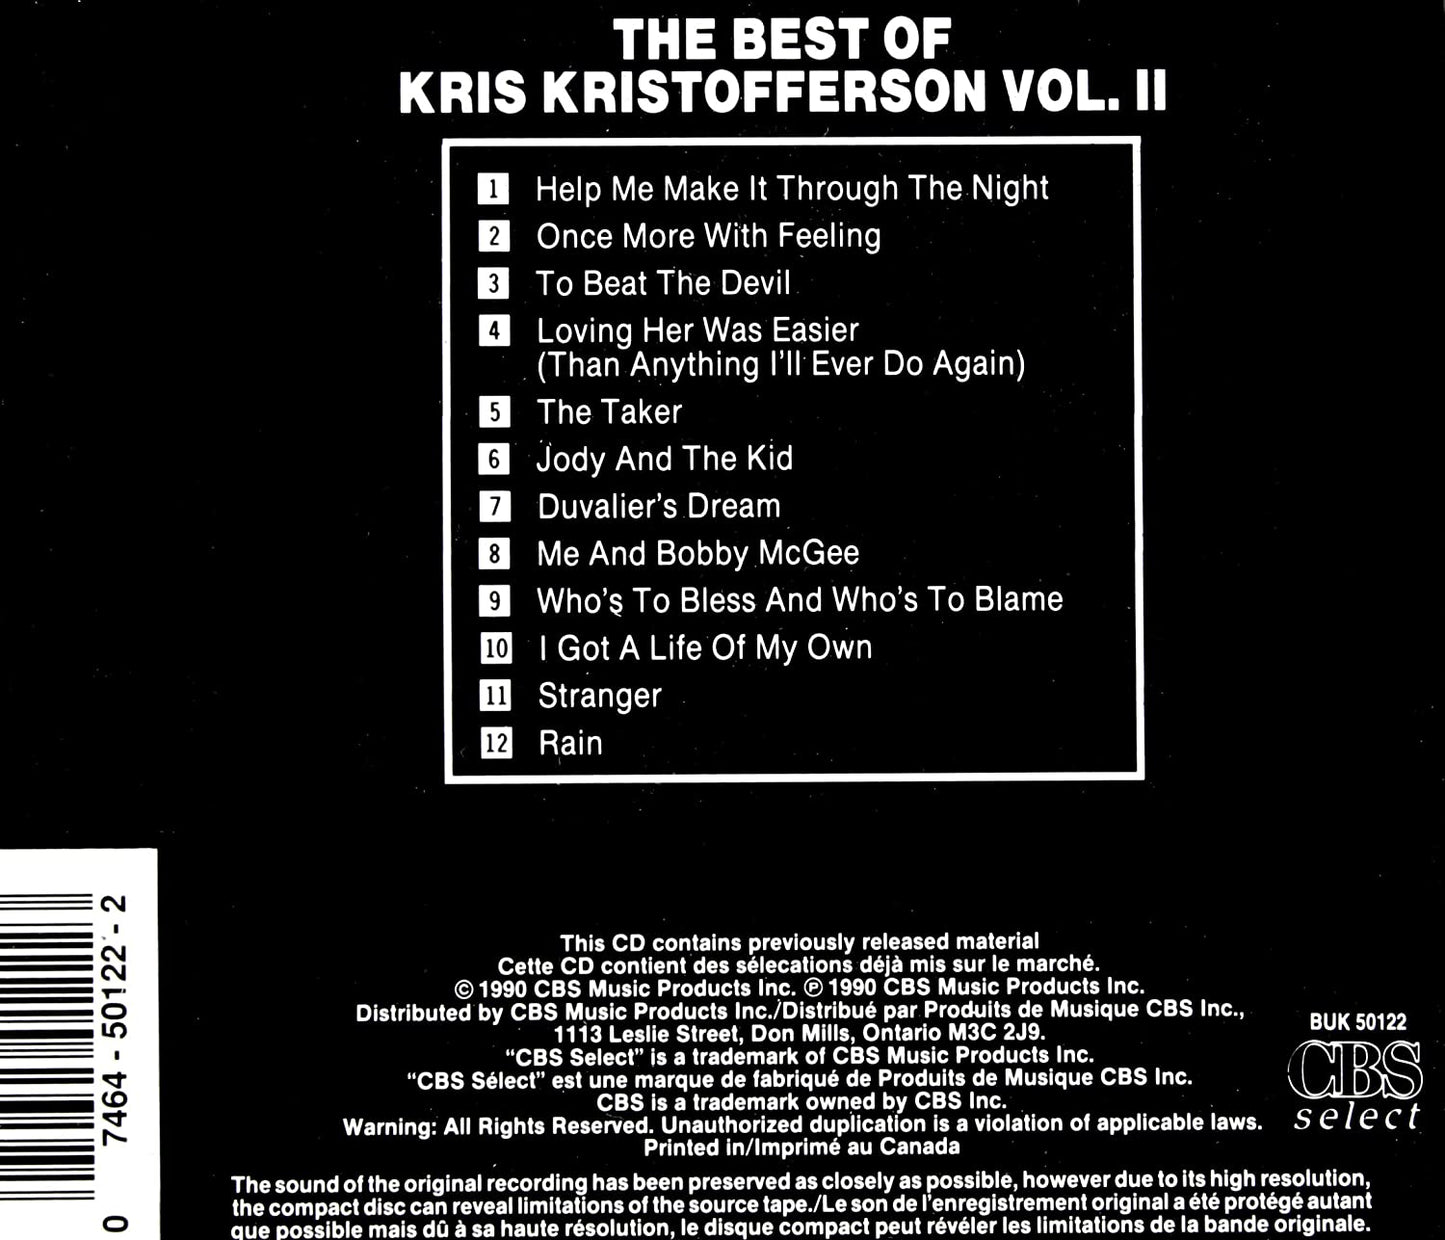 Kris Kristofferson - The Best Of Vol 2 - CD